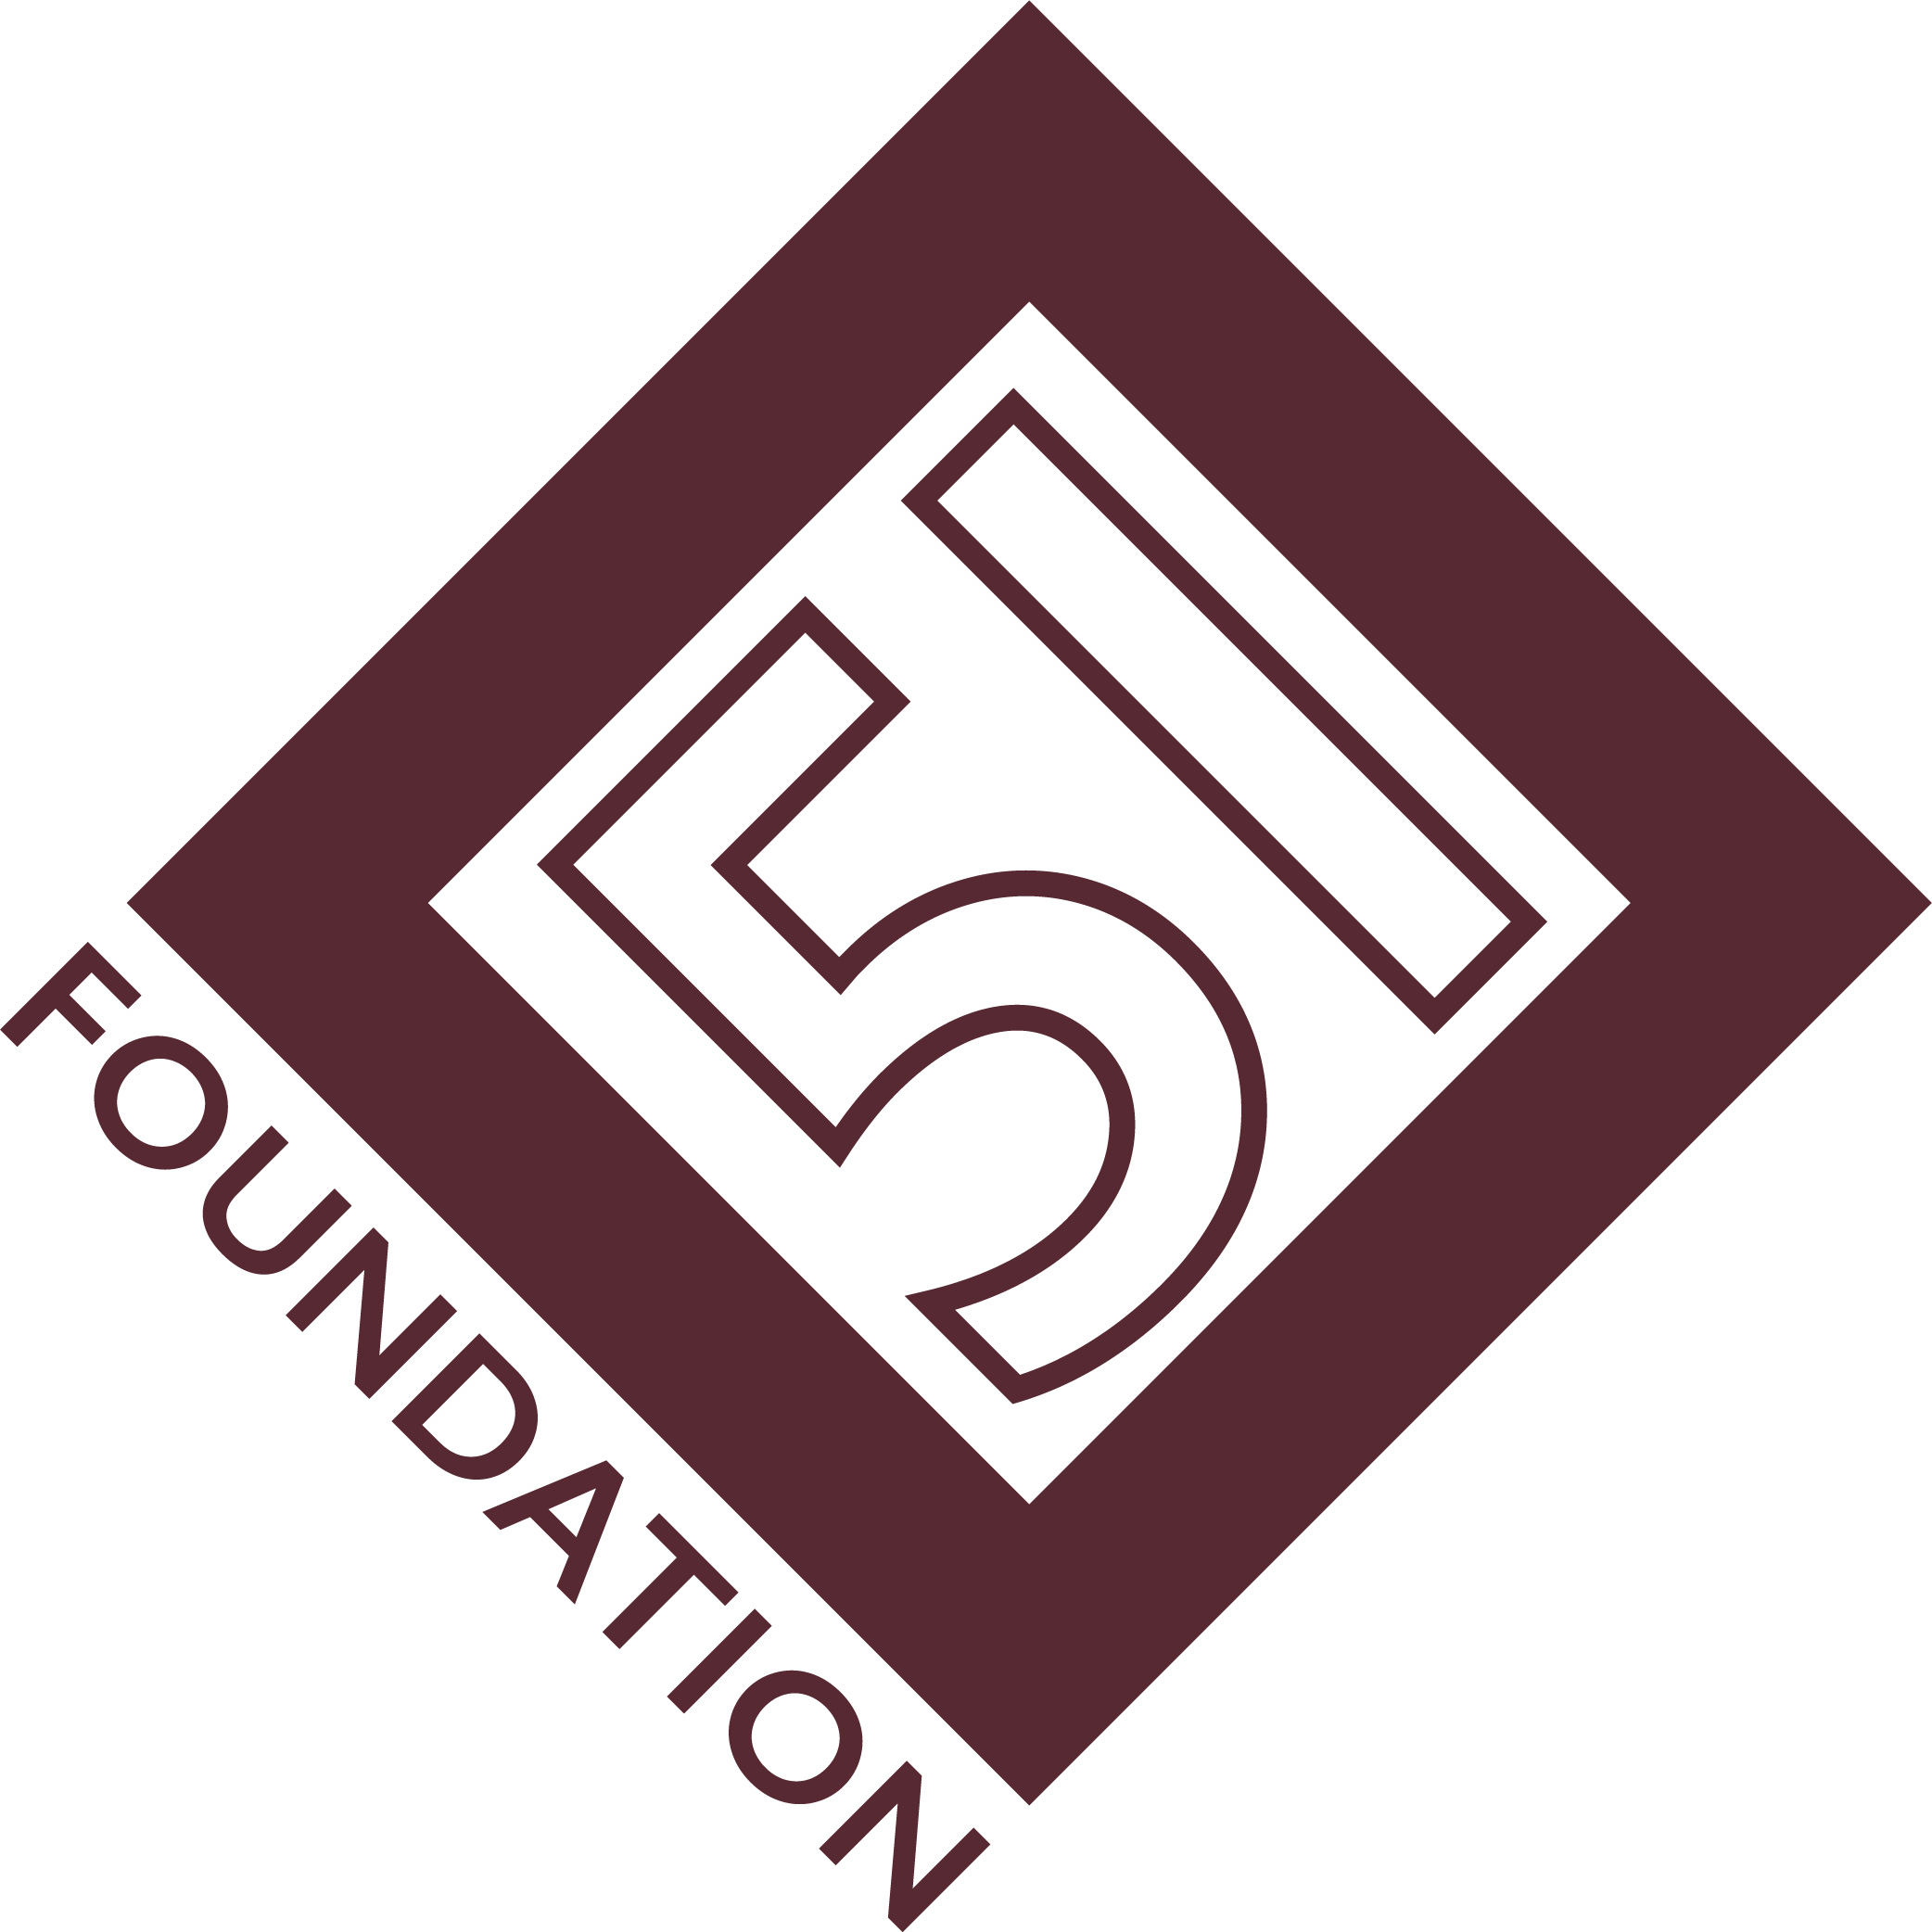 Foundation 51